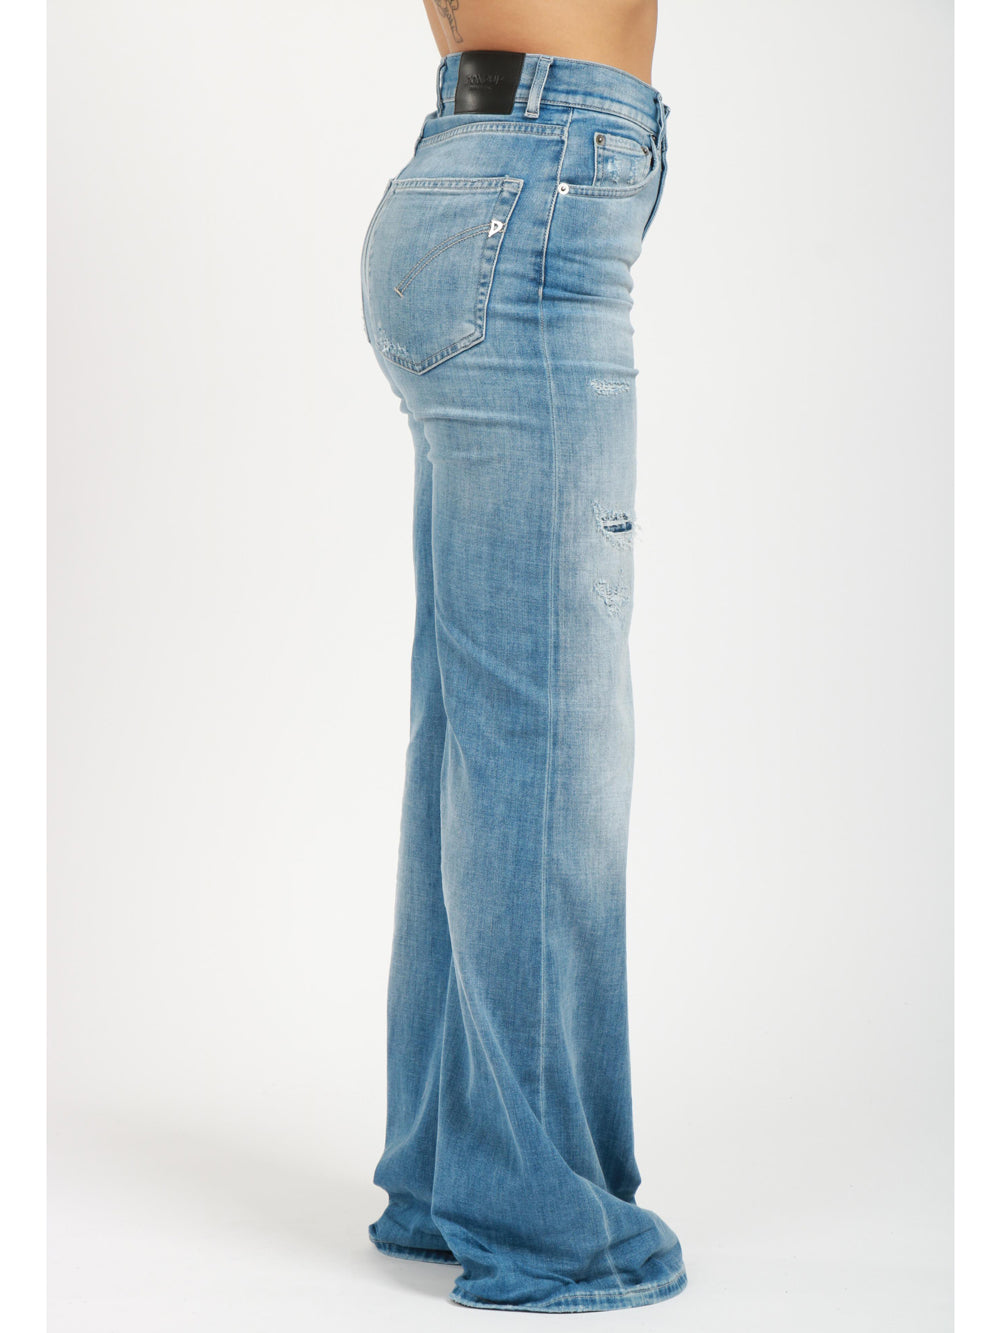 DONDUP Jeans Amber Palazzo in Denim Blu con Rotture Denim chiaro